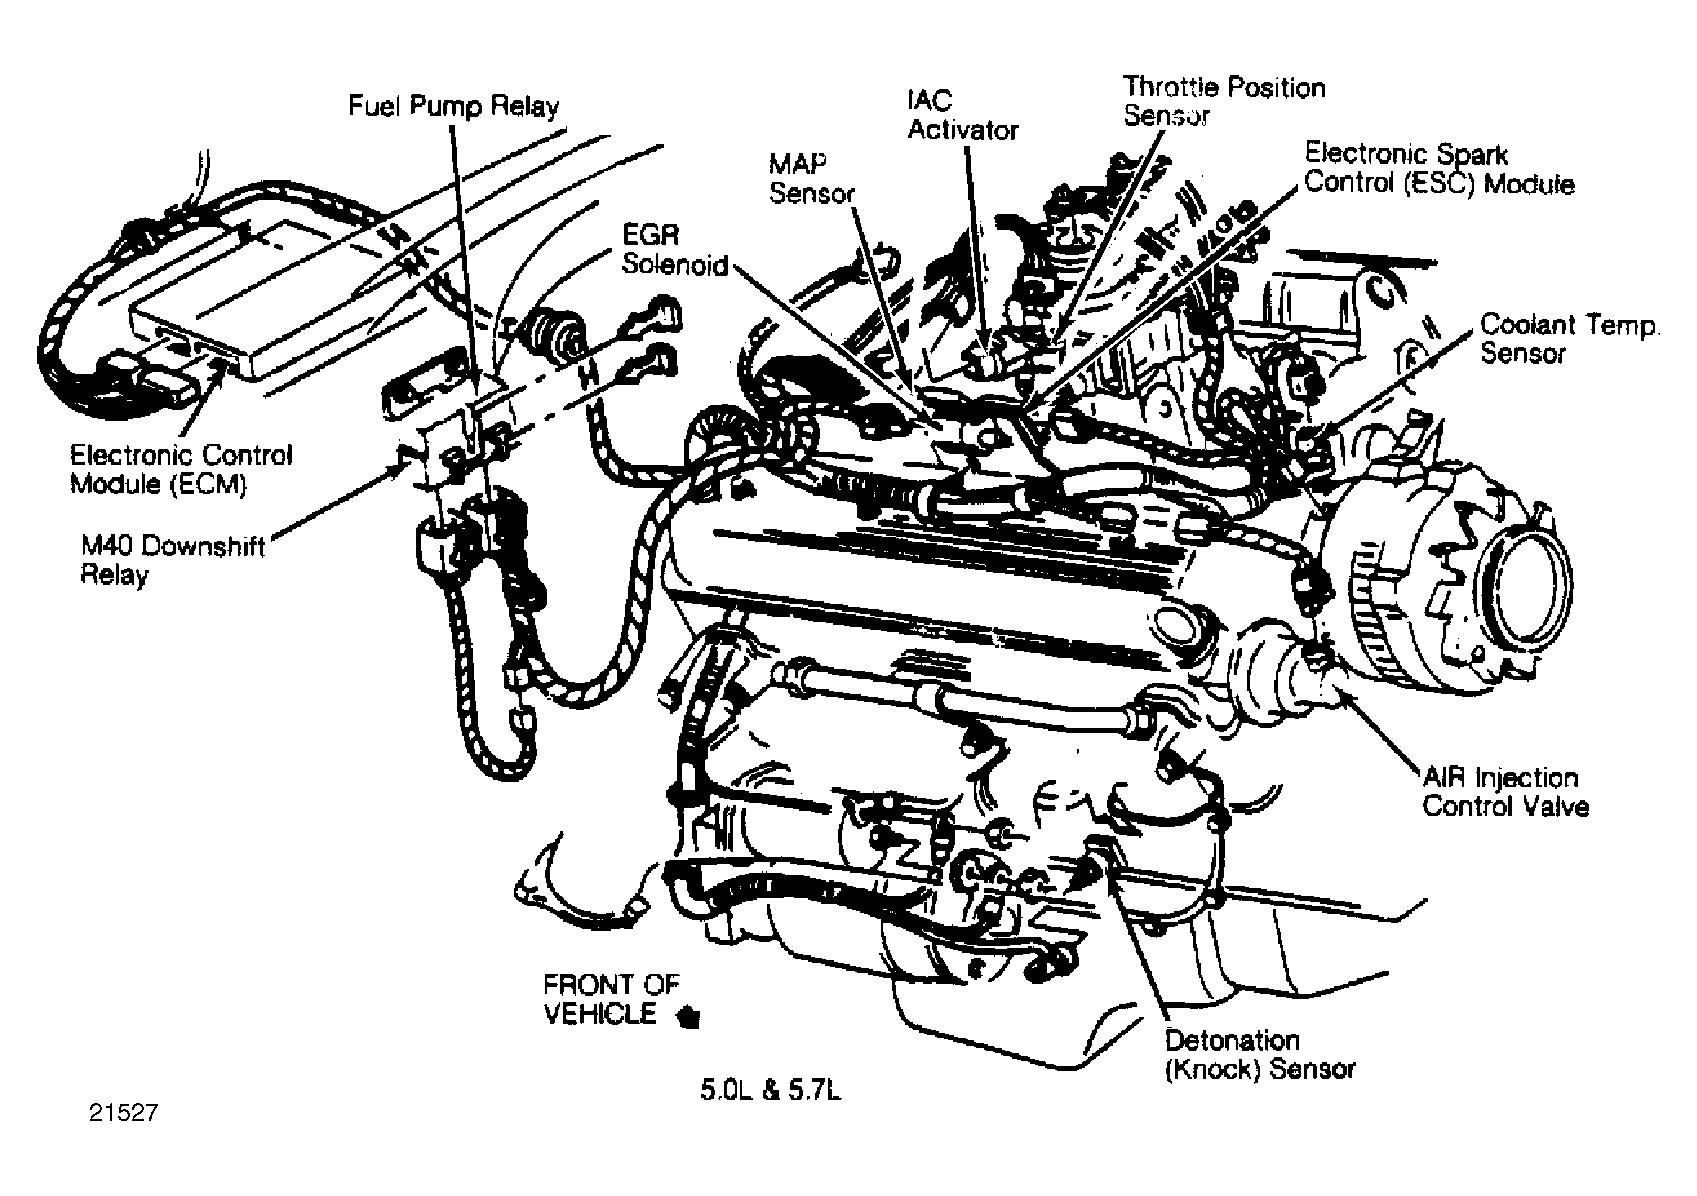 5.7 Engine Diagrame Dodge 5.7 Chevy Silverado Engine Diagram Wiring Diagram Limited Of 5.7 Engine Diagrame Dodge 5.7